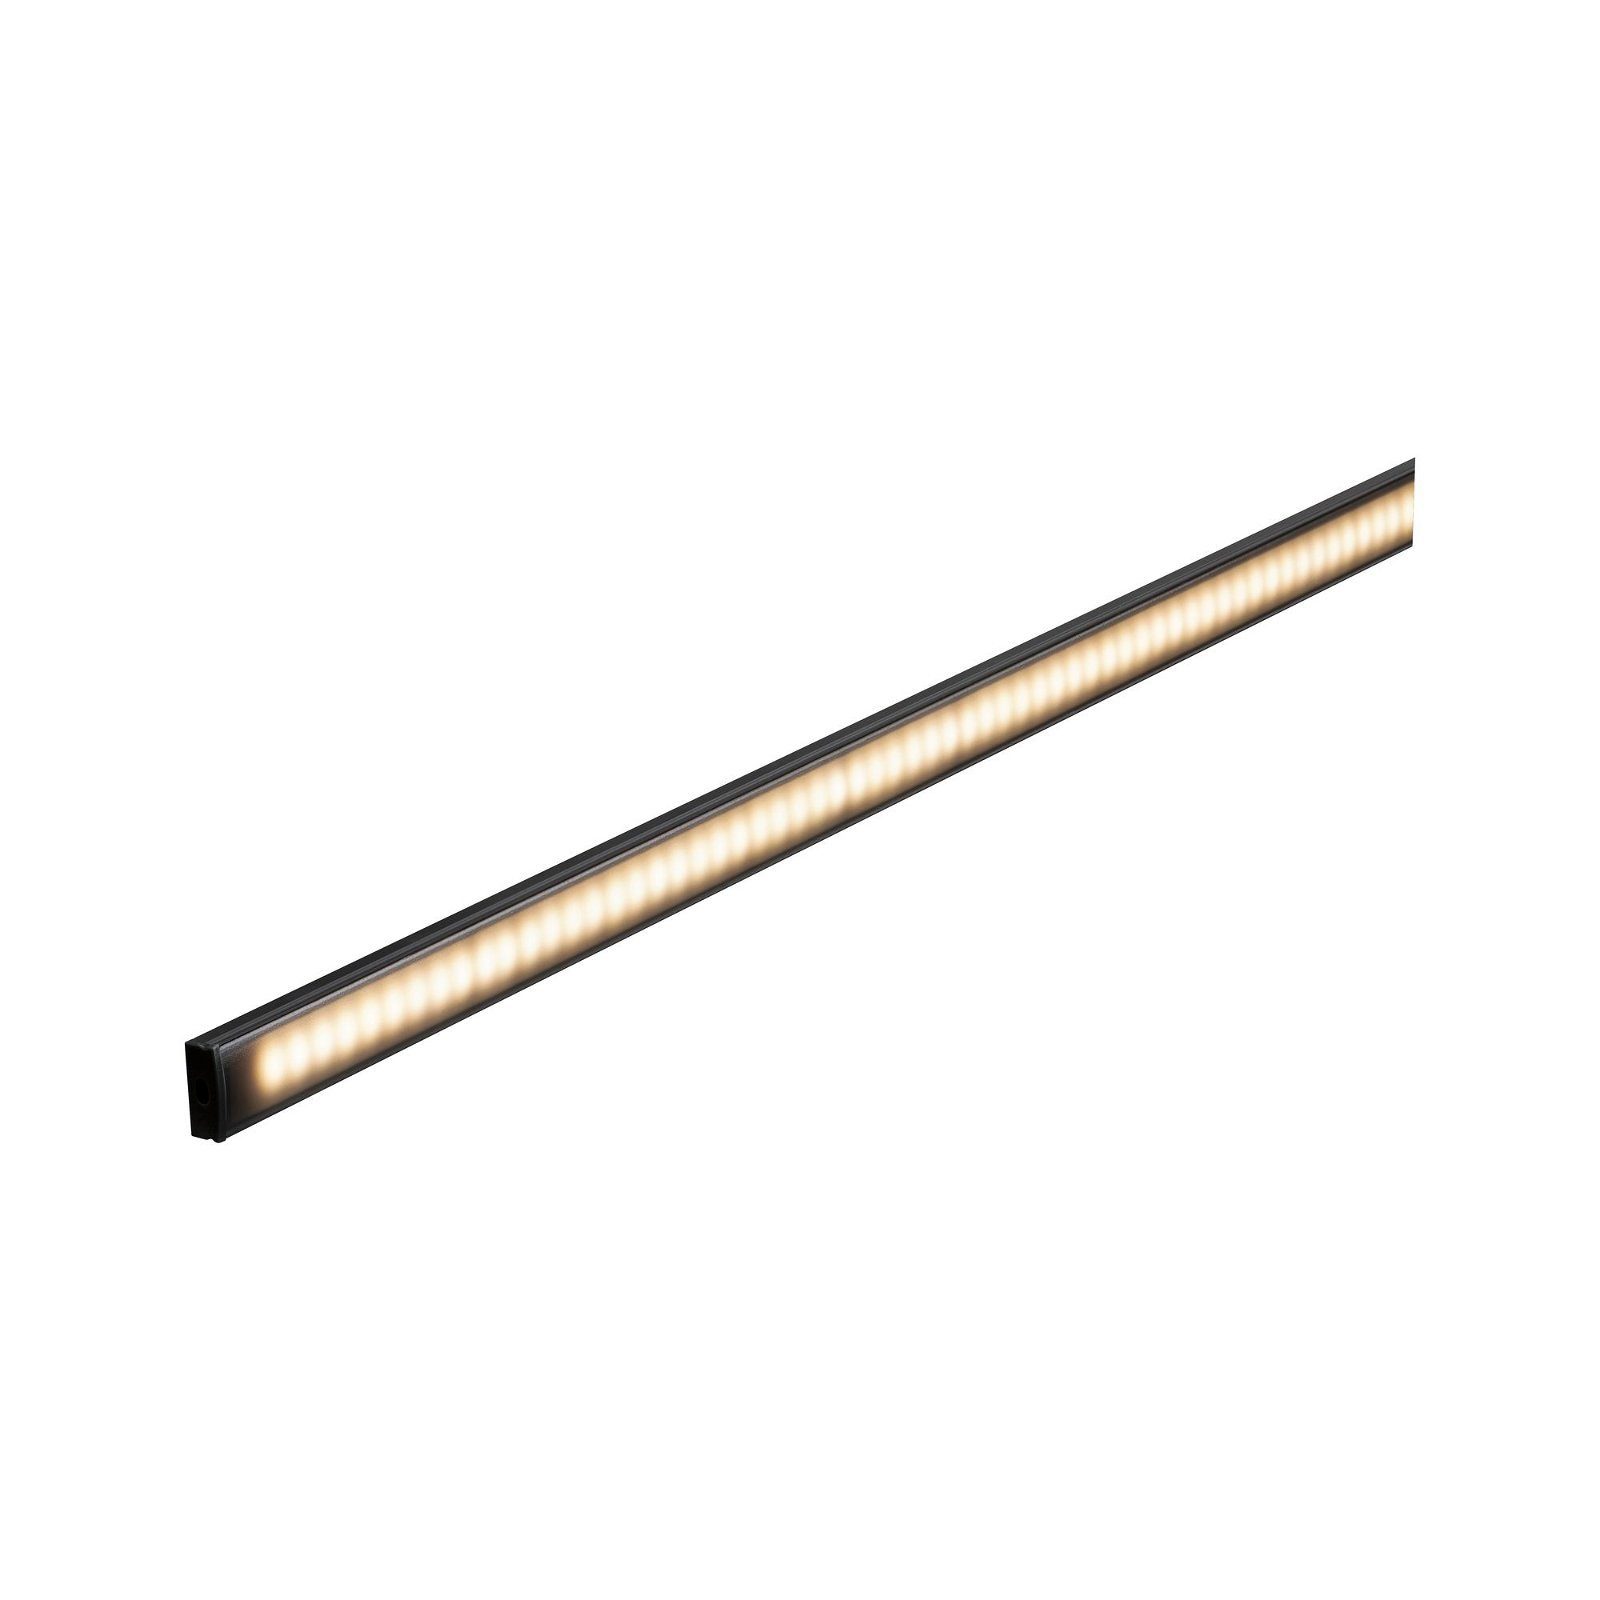 Paulmann Diffusor schwarz 2m Alu/Kunststoff LED-Stripe-Profil Base Profil mit eloxiert/schwarz